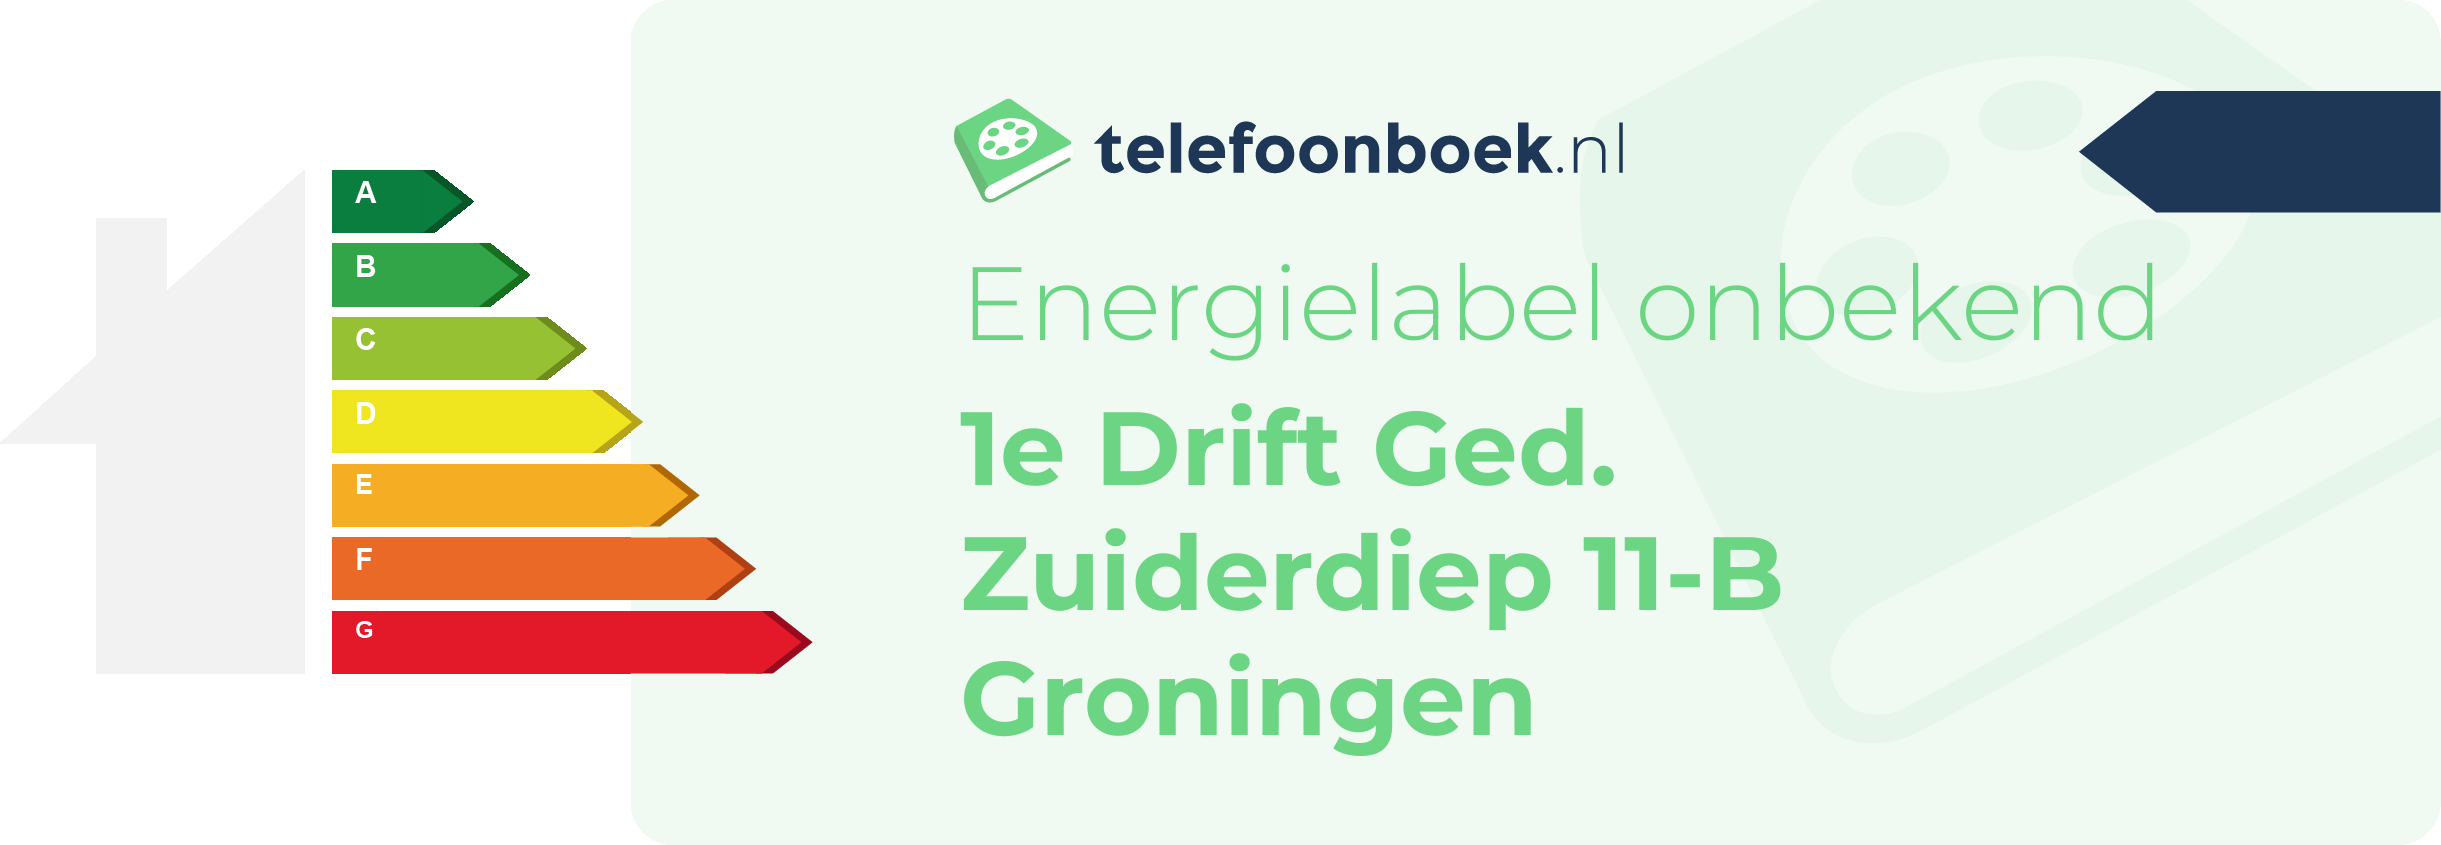 Energielabel 1e Drift Ged. Zuiderdiep 11-B Groningen